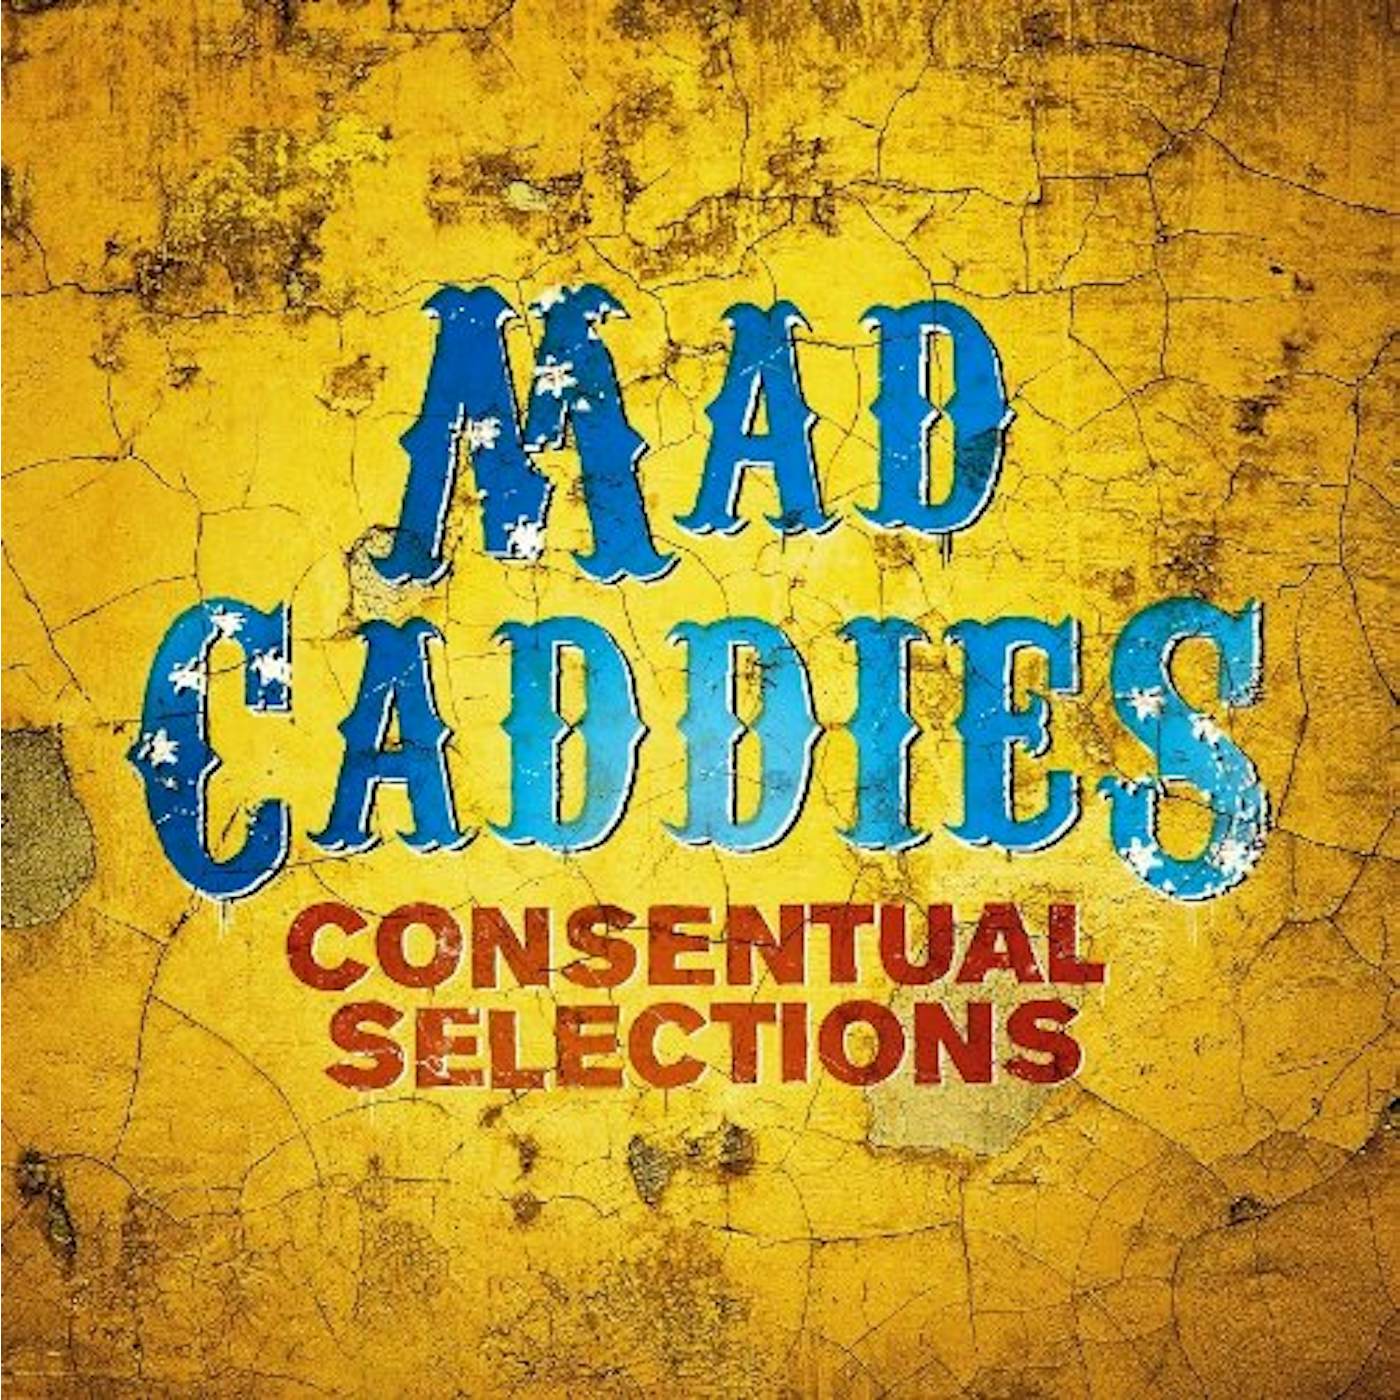 Mad Caddies Consentual Selections Vinyl Record